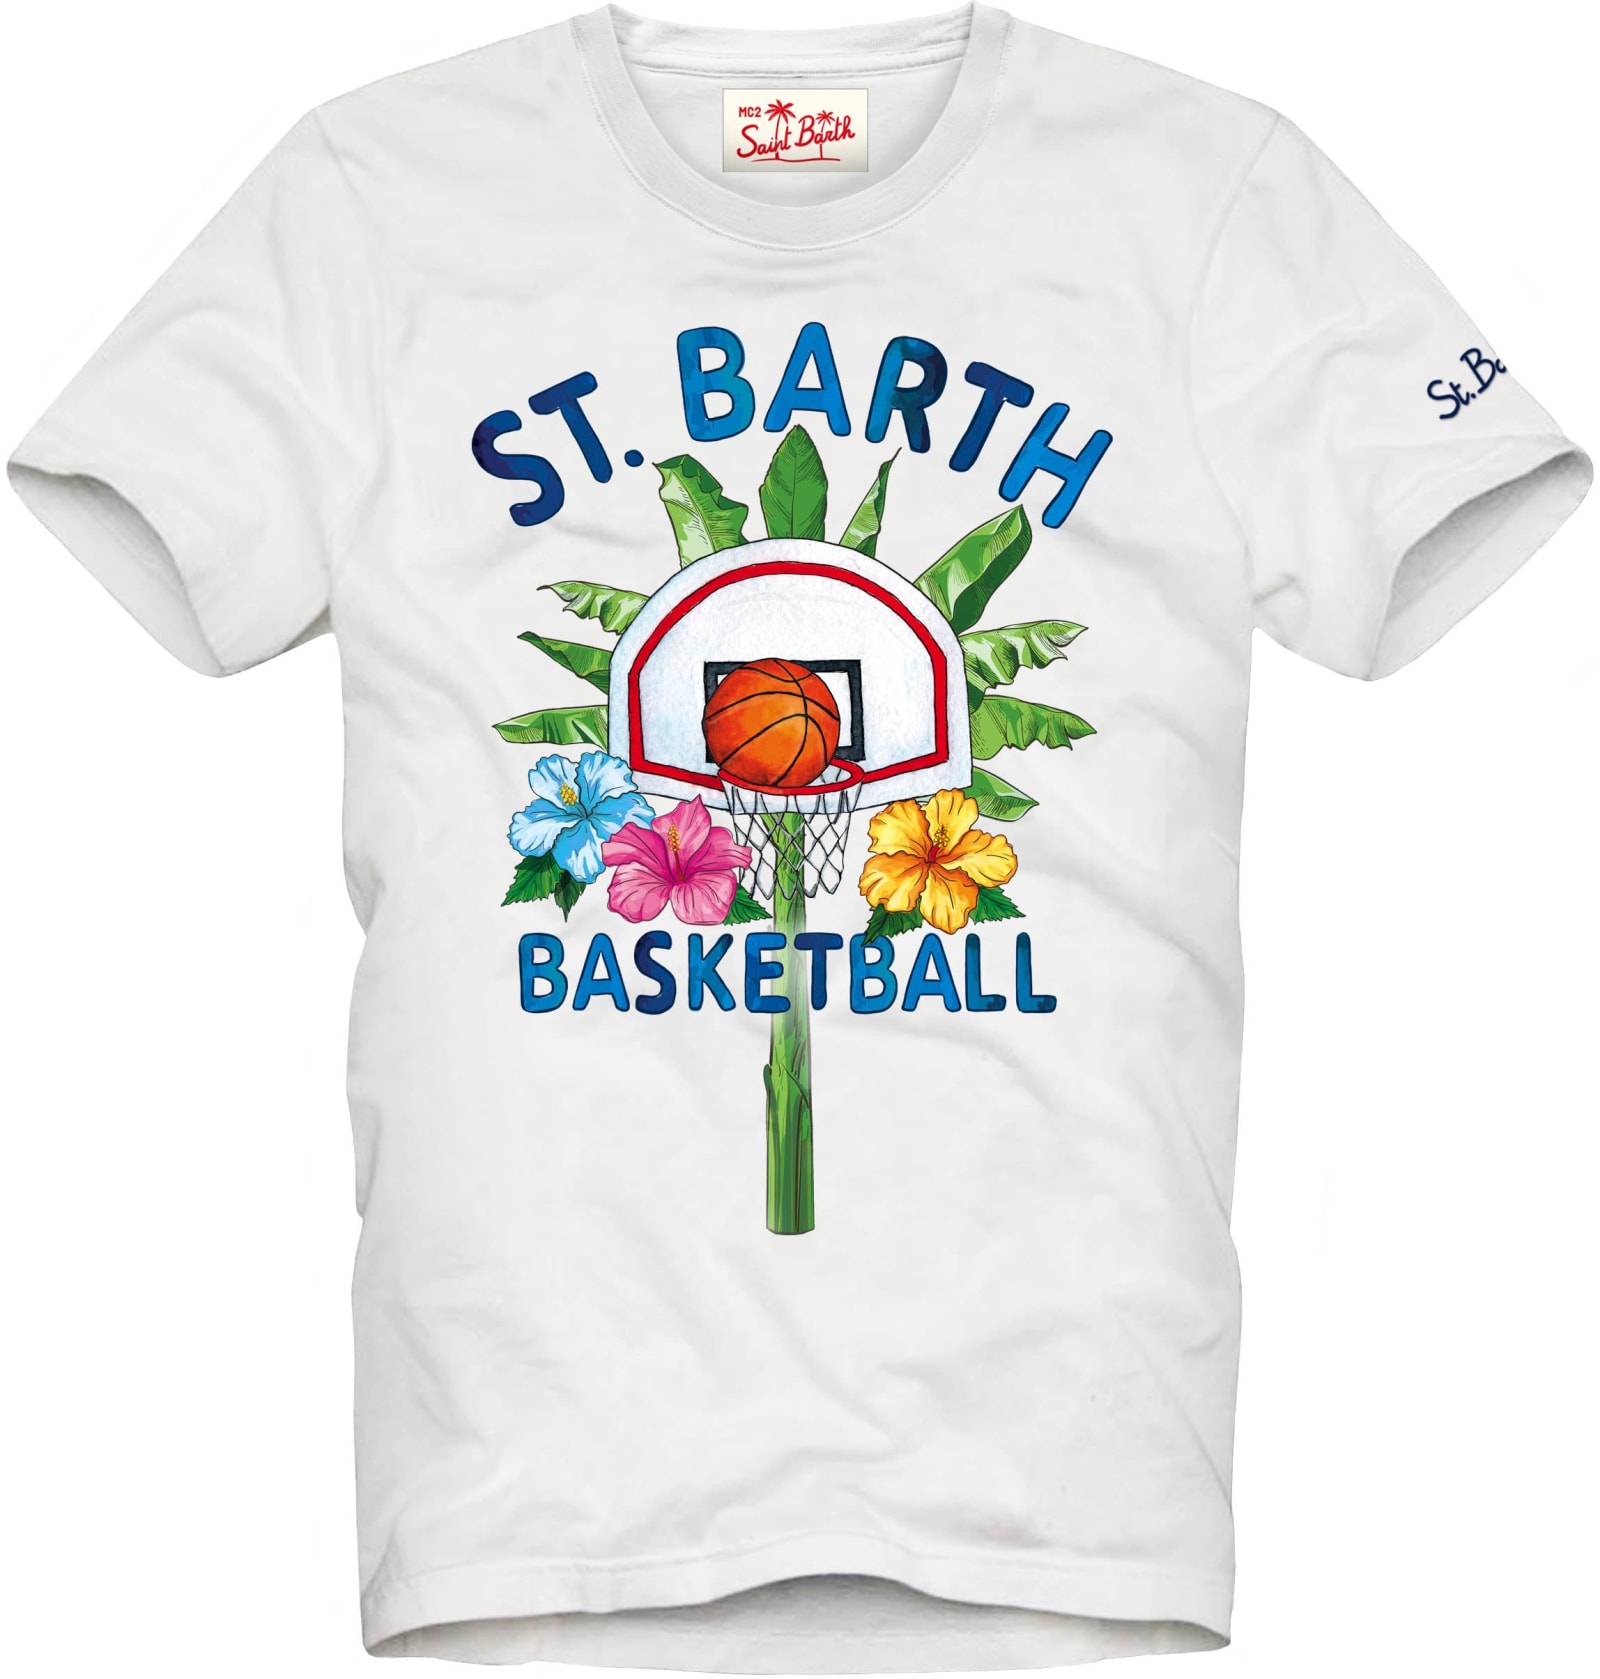 Mc2 Saint Barth Man Cotton T-shirt With St. Barth Basketball Print